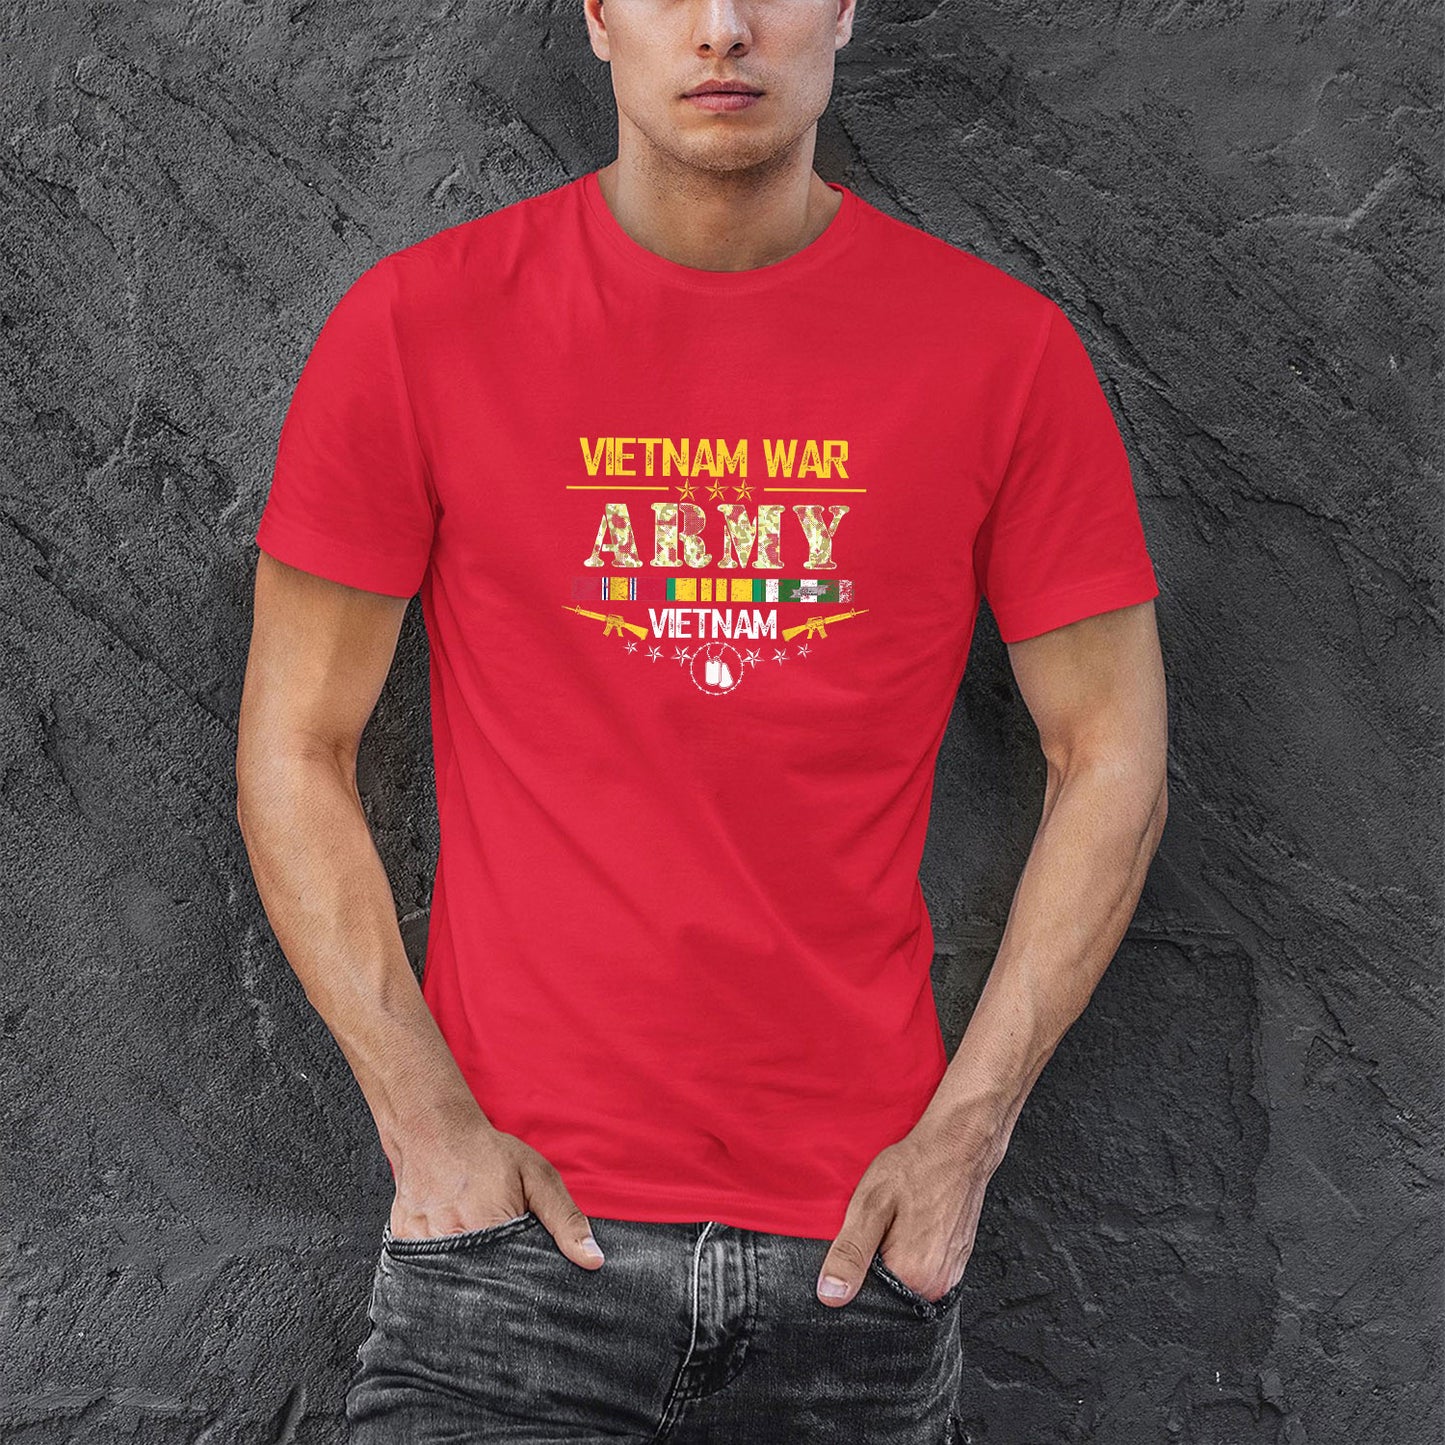 Memorial Day 2021 Vietnam Veteran T Shirts, Vietnam Veteran War Army T Shirt For Those Who Served T shirt For Men, Cotton Shirt, Air Force Memorial Shirt, Usaf T Shirt